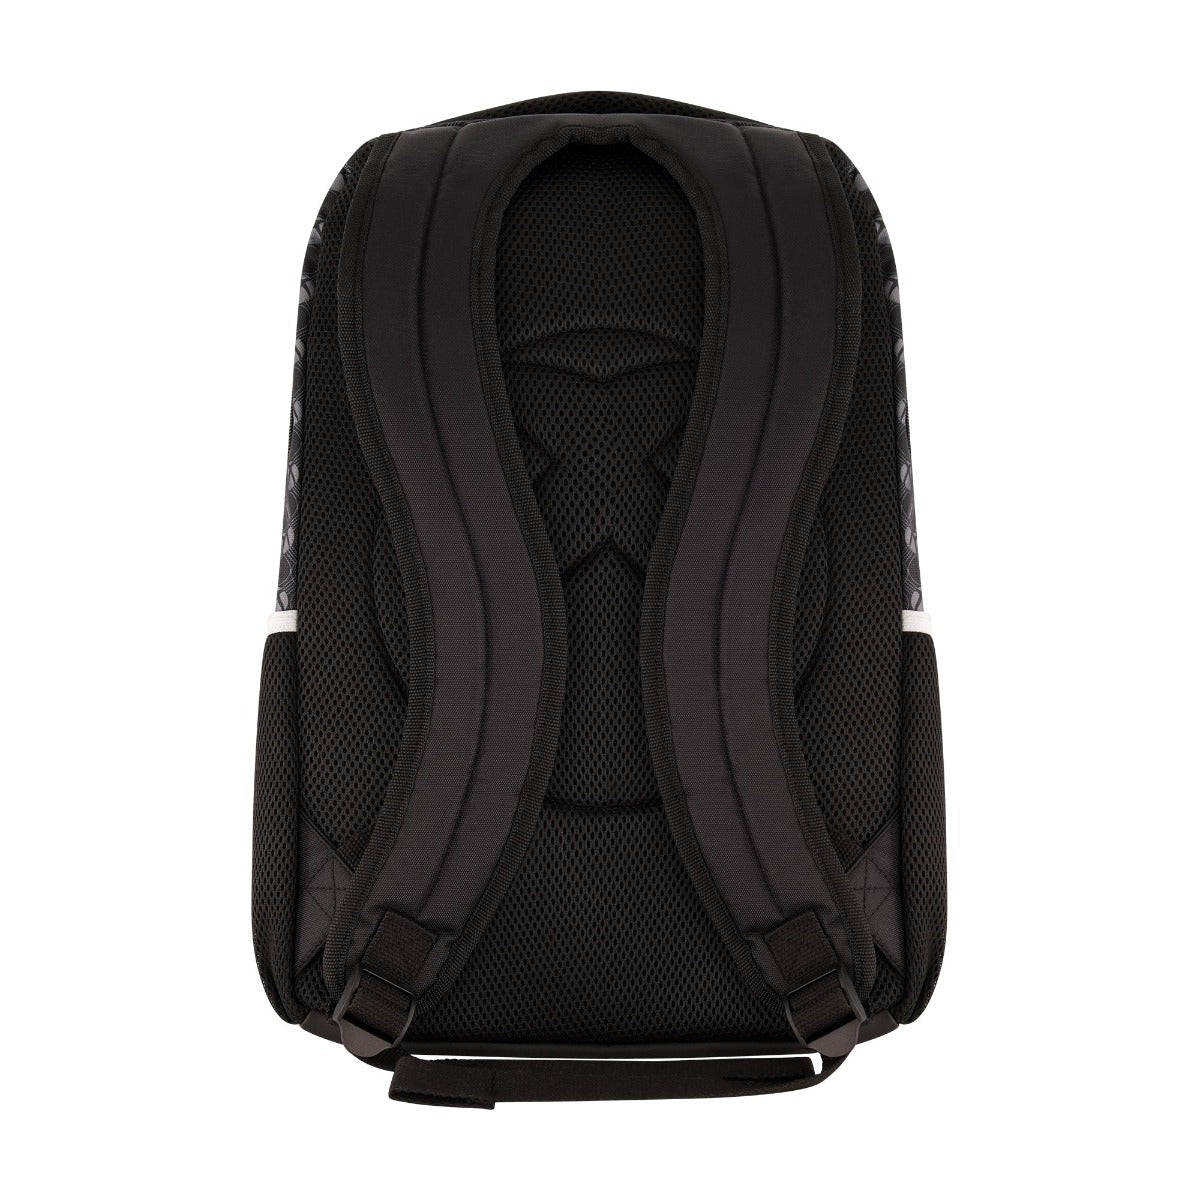 Black Xbox gamer geome backpack - best tech backpacks for gamers